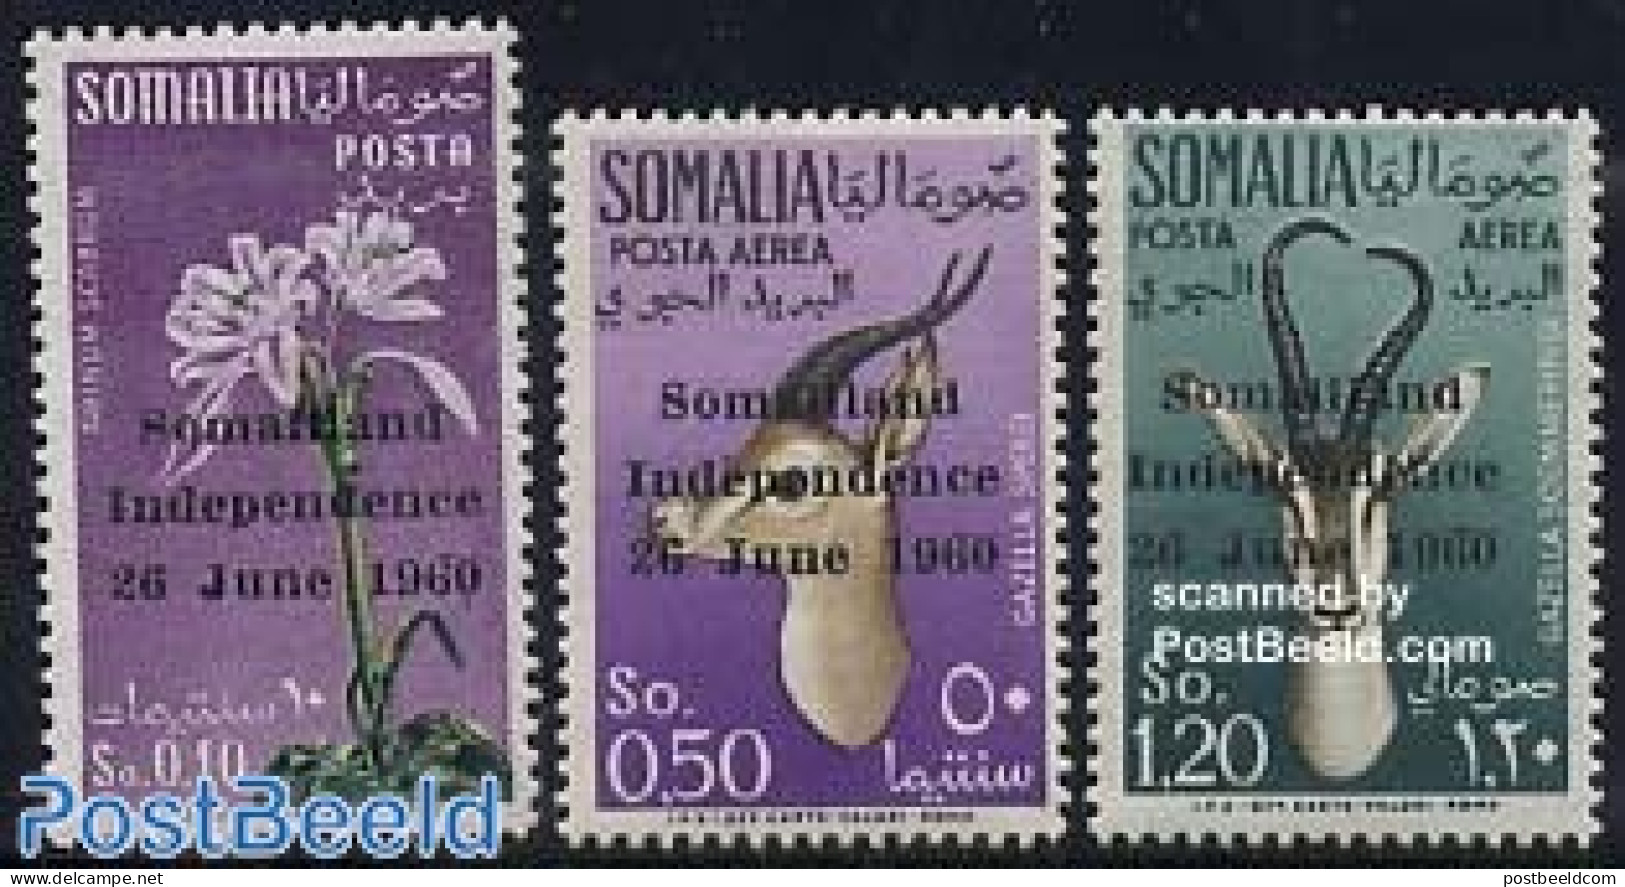 Somalia 1960 Independence 3v, Mint NH, Nature - Animals (others & Mixed) - Flowers & Plants - Wild Mammals - Somalië (1960-...)